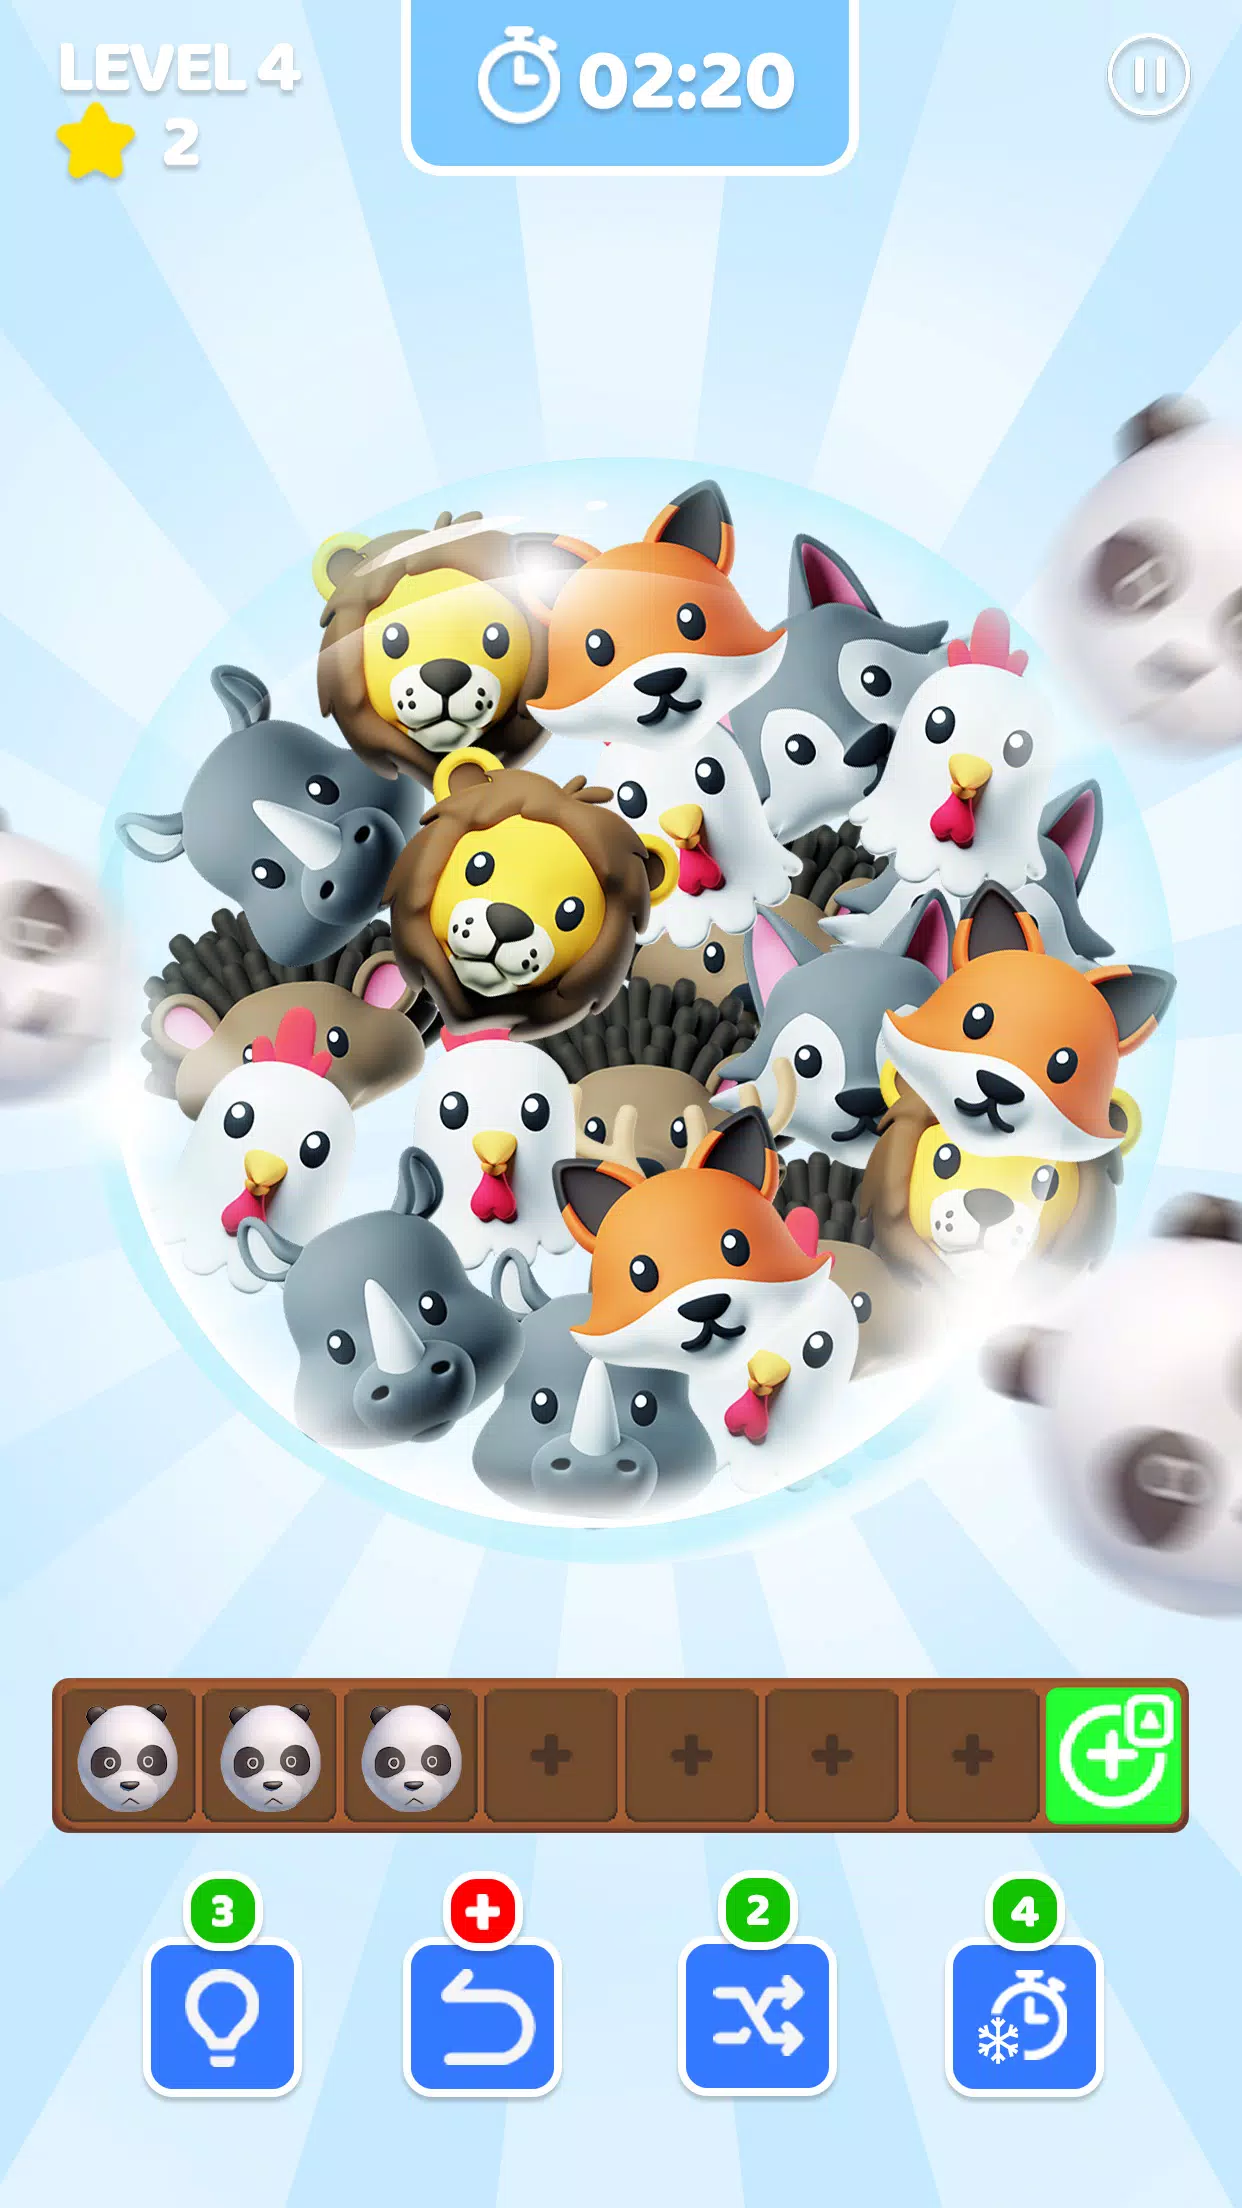 Bubble Shooter Pet Apk Download for Android- Latest version 1.3.3- com. bubble.shooter.pet.games